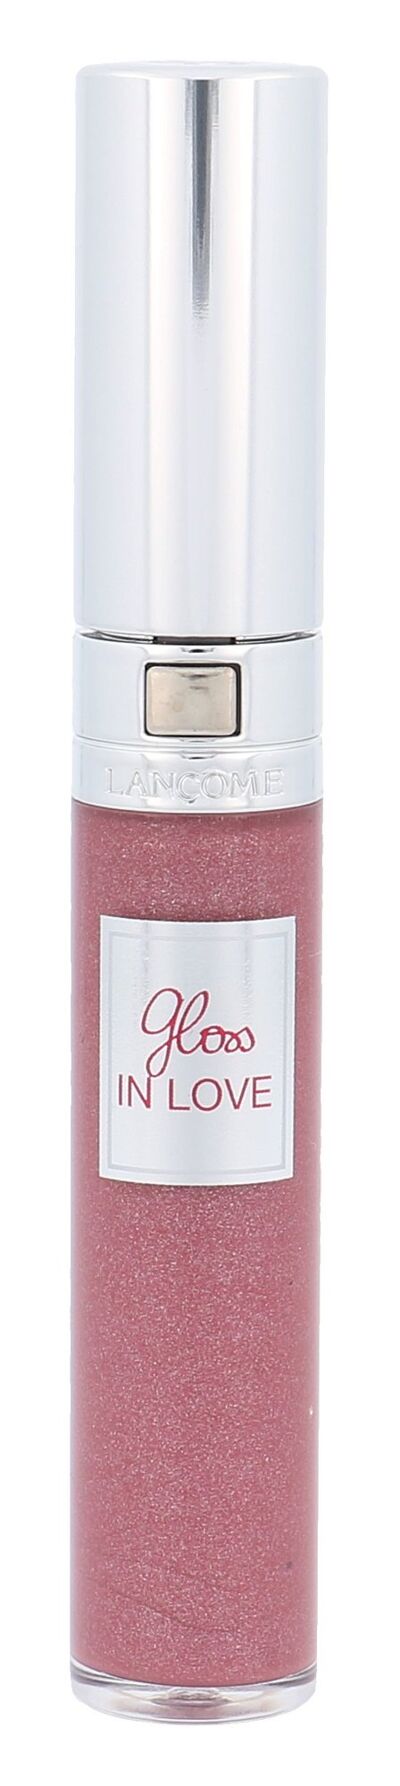 Lancôme Gloss In Love Cosmetic 6ml 351